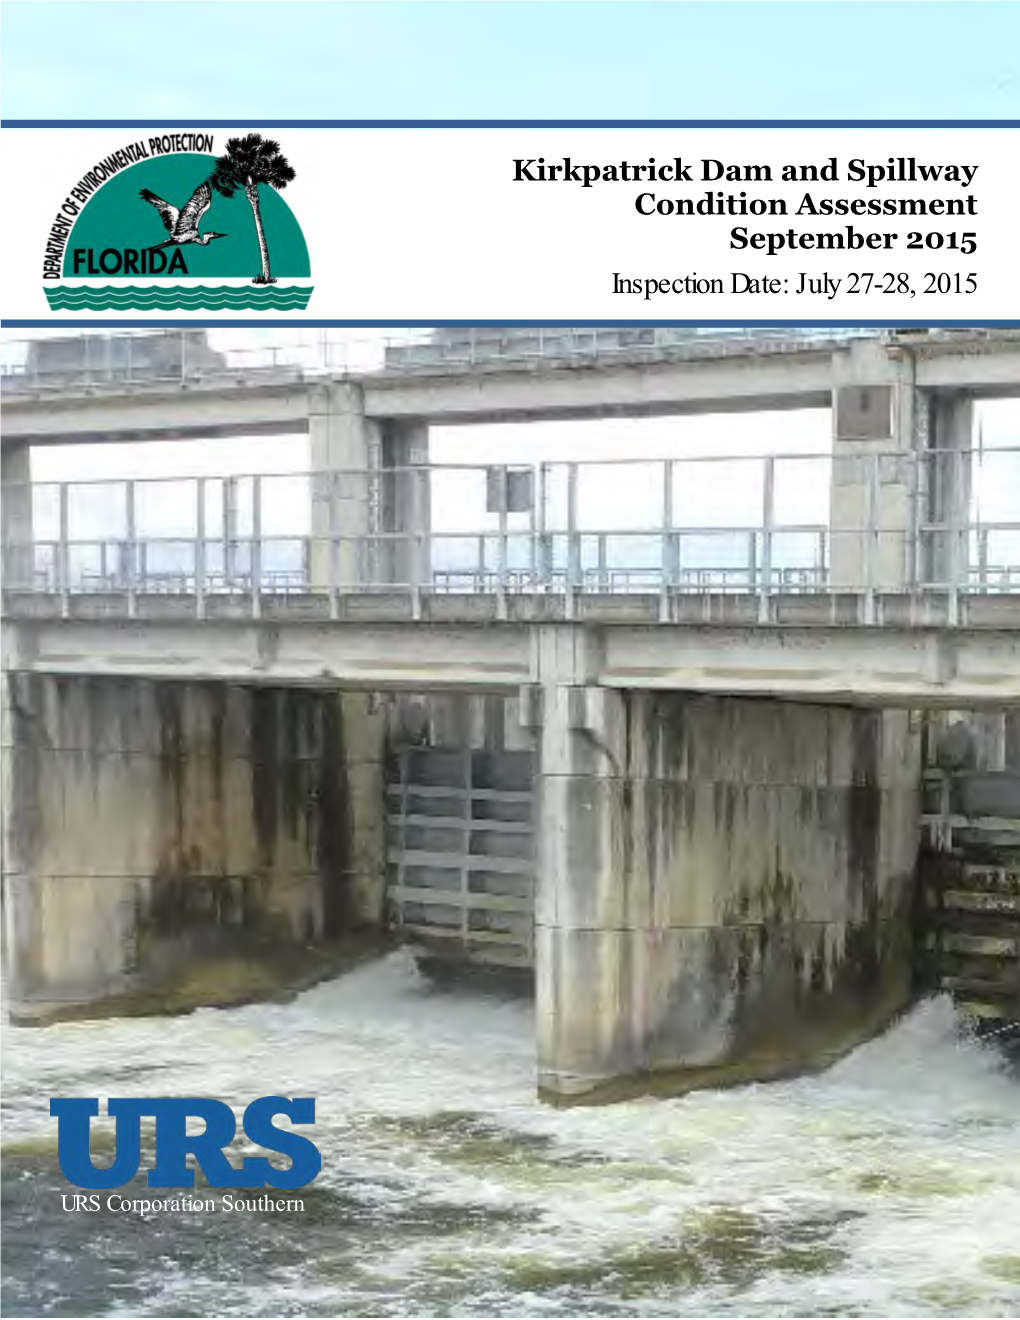 Kirkpatrick Dam 2015 Condition Assessment Report II